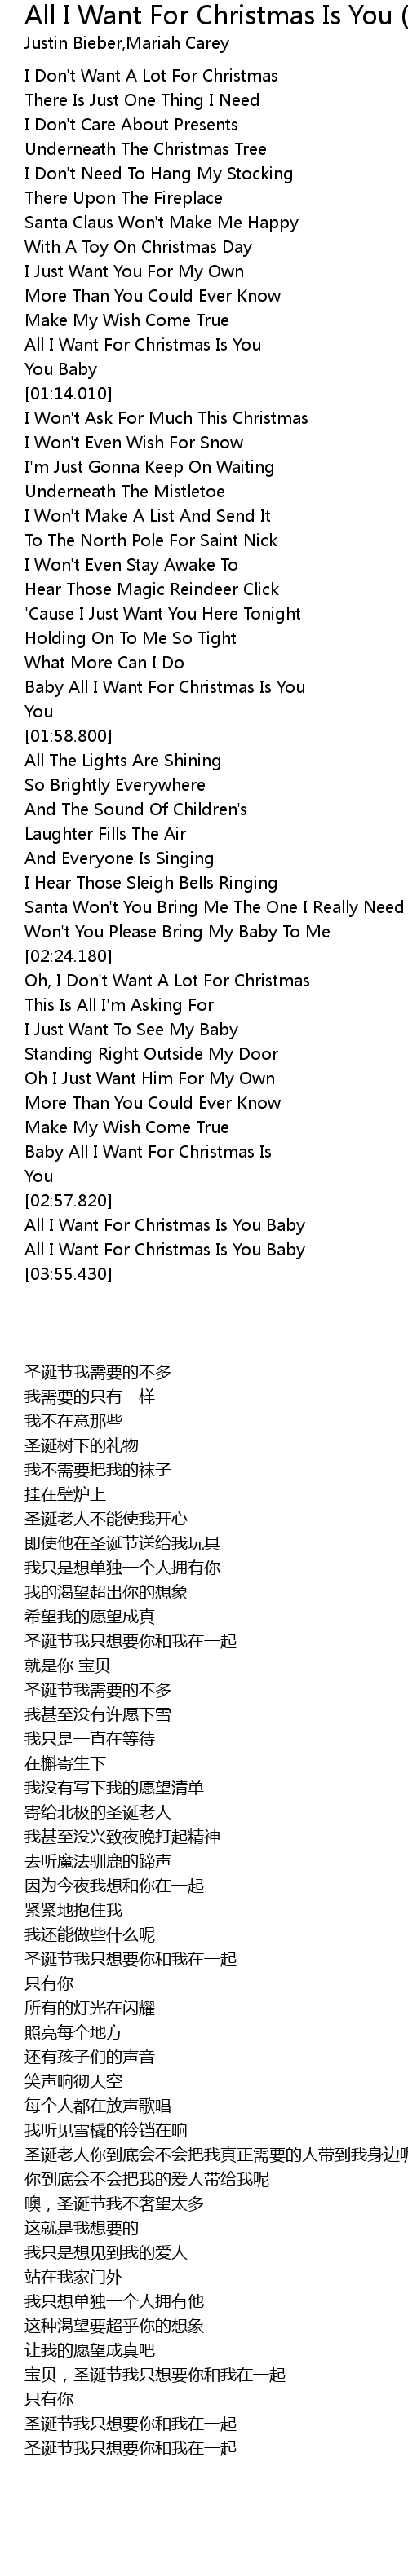 All I Want For Christmas Is You Superfestive Duet With Mariah Carey Lyrics Follow Lyrics